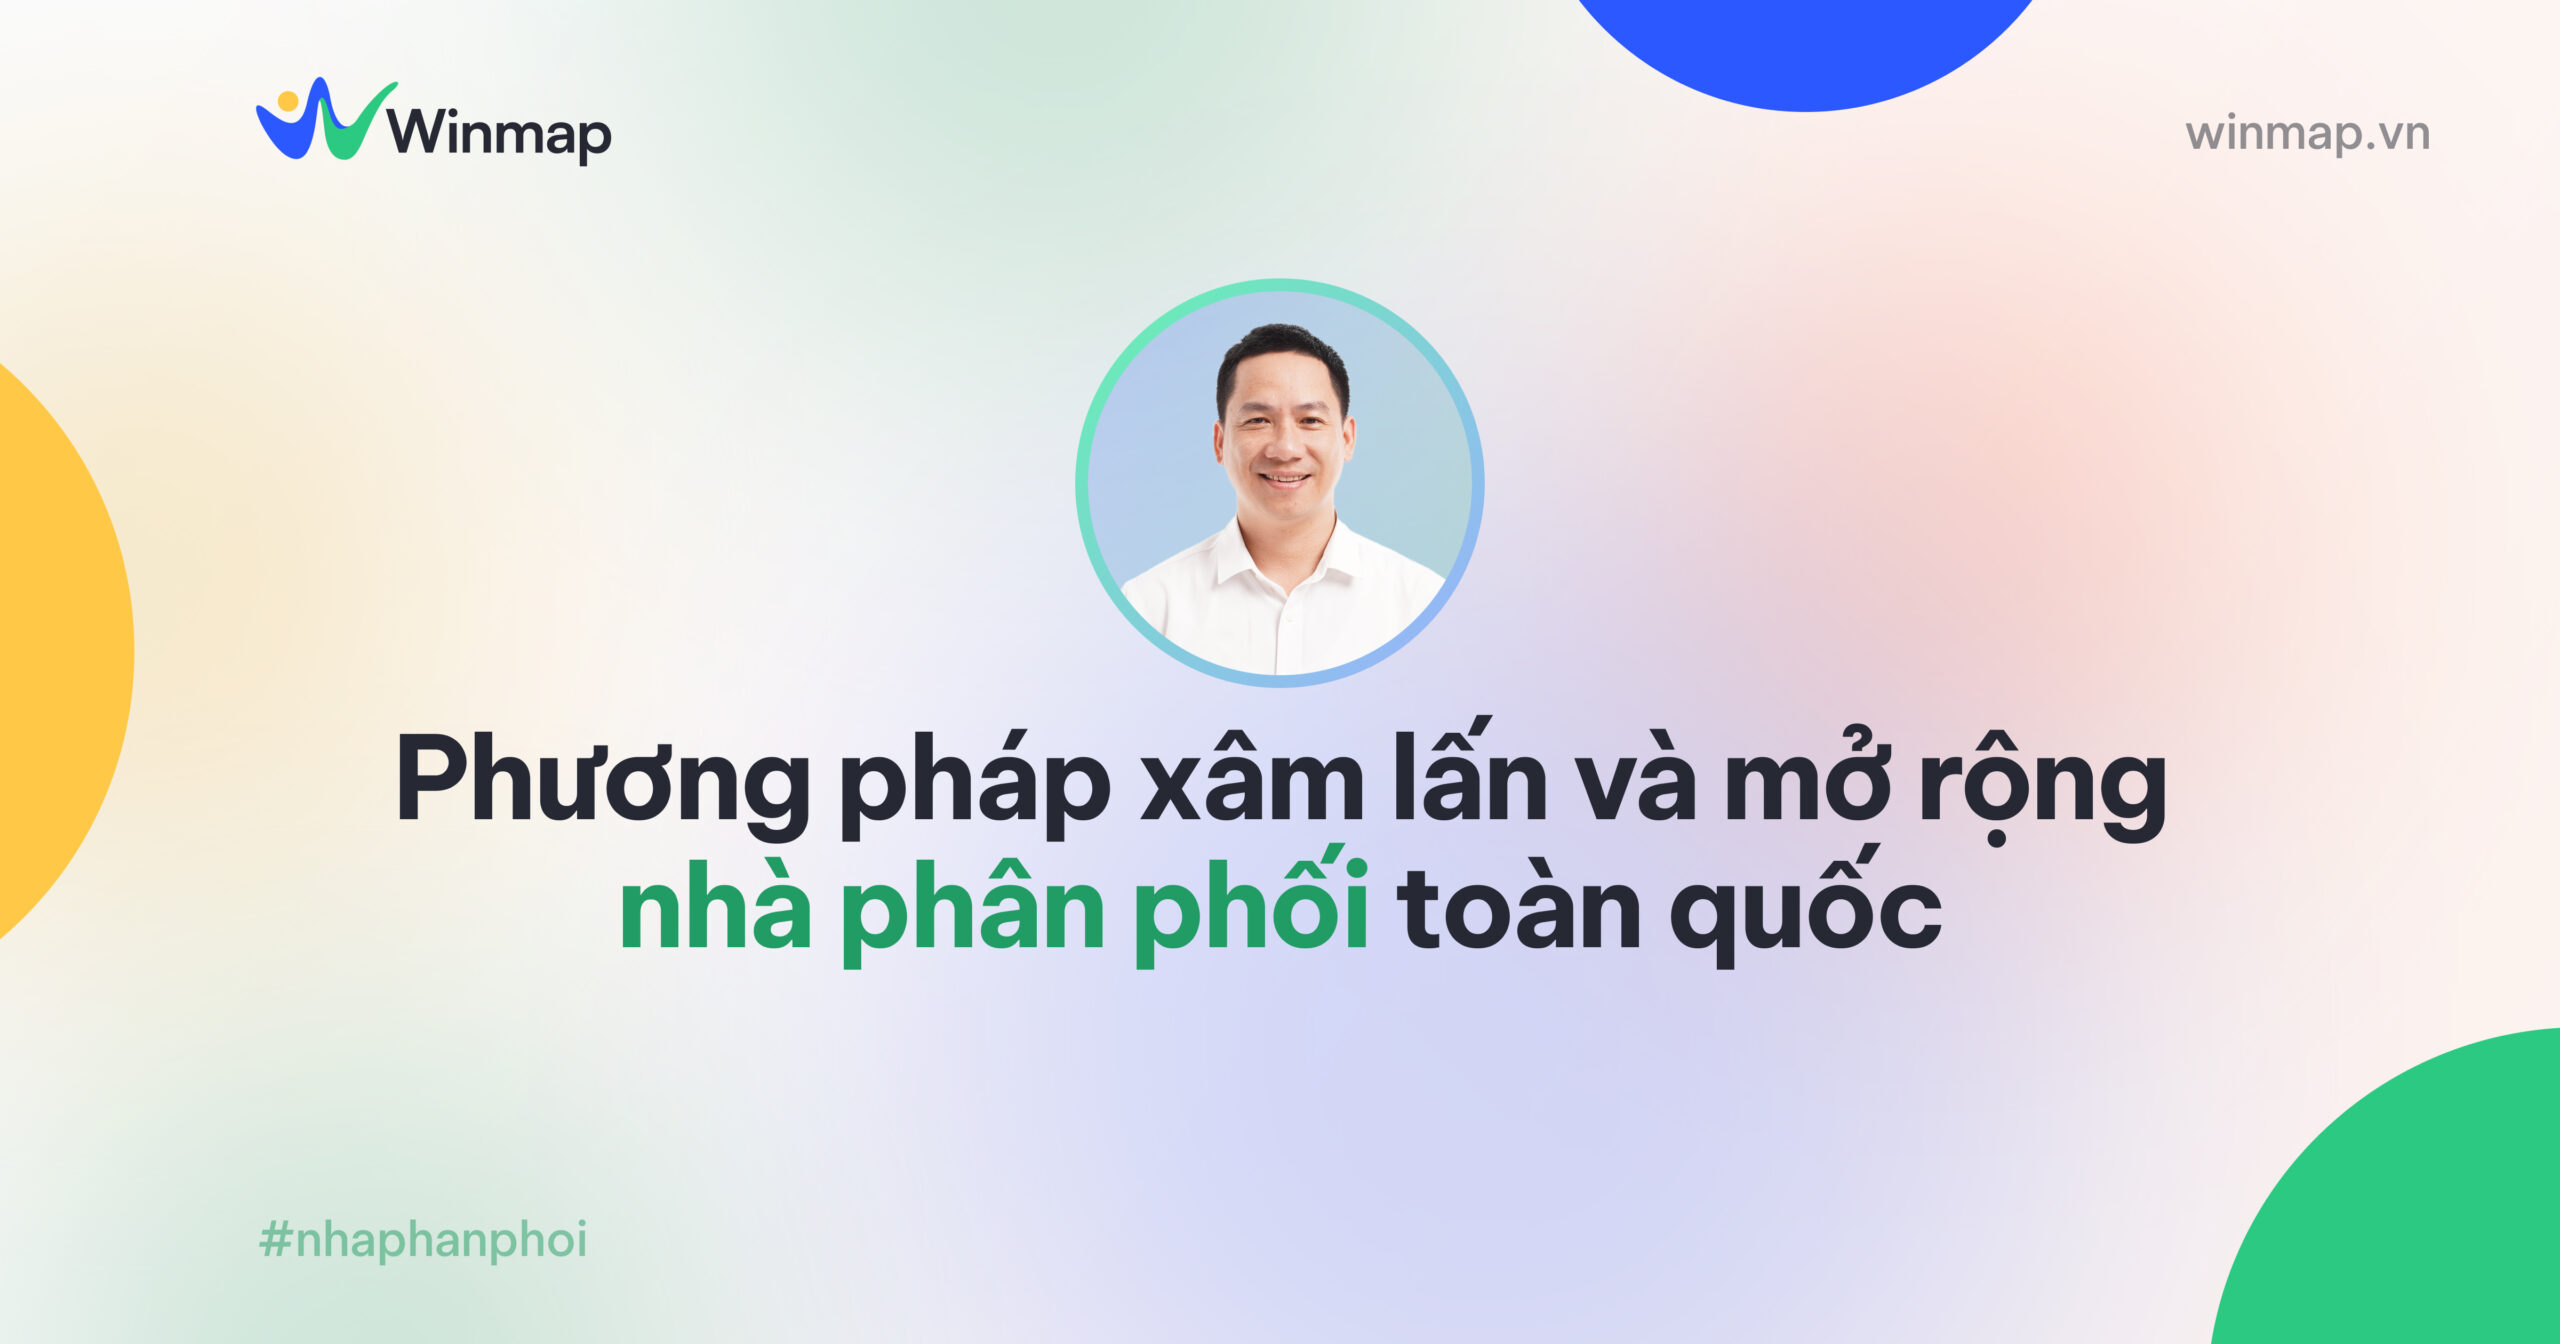 phuong-phap-xam-lan-va-mo-rong-nha-phan-phoi-khap-cac-tinh-thanh-vung-mien